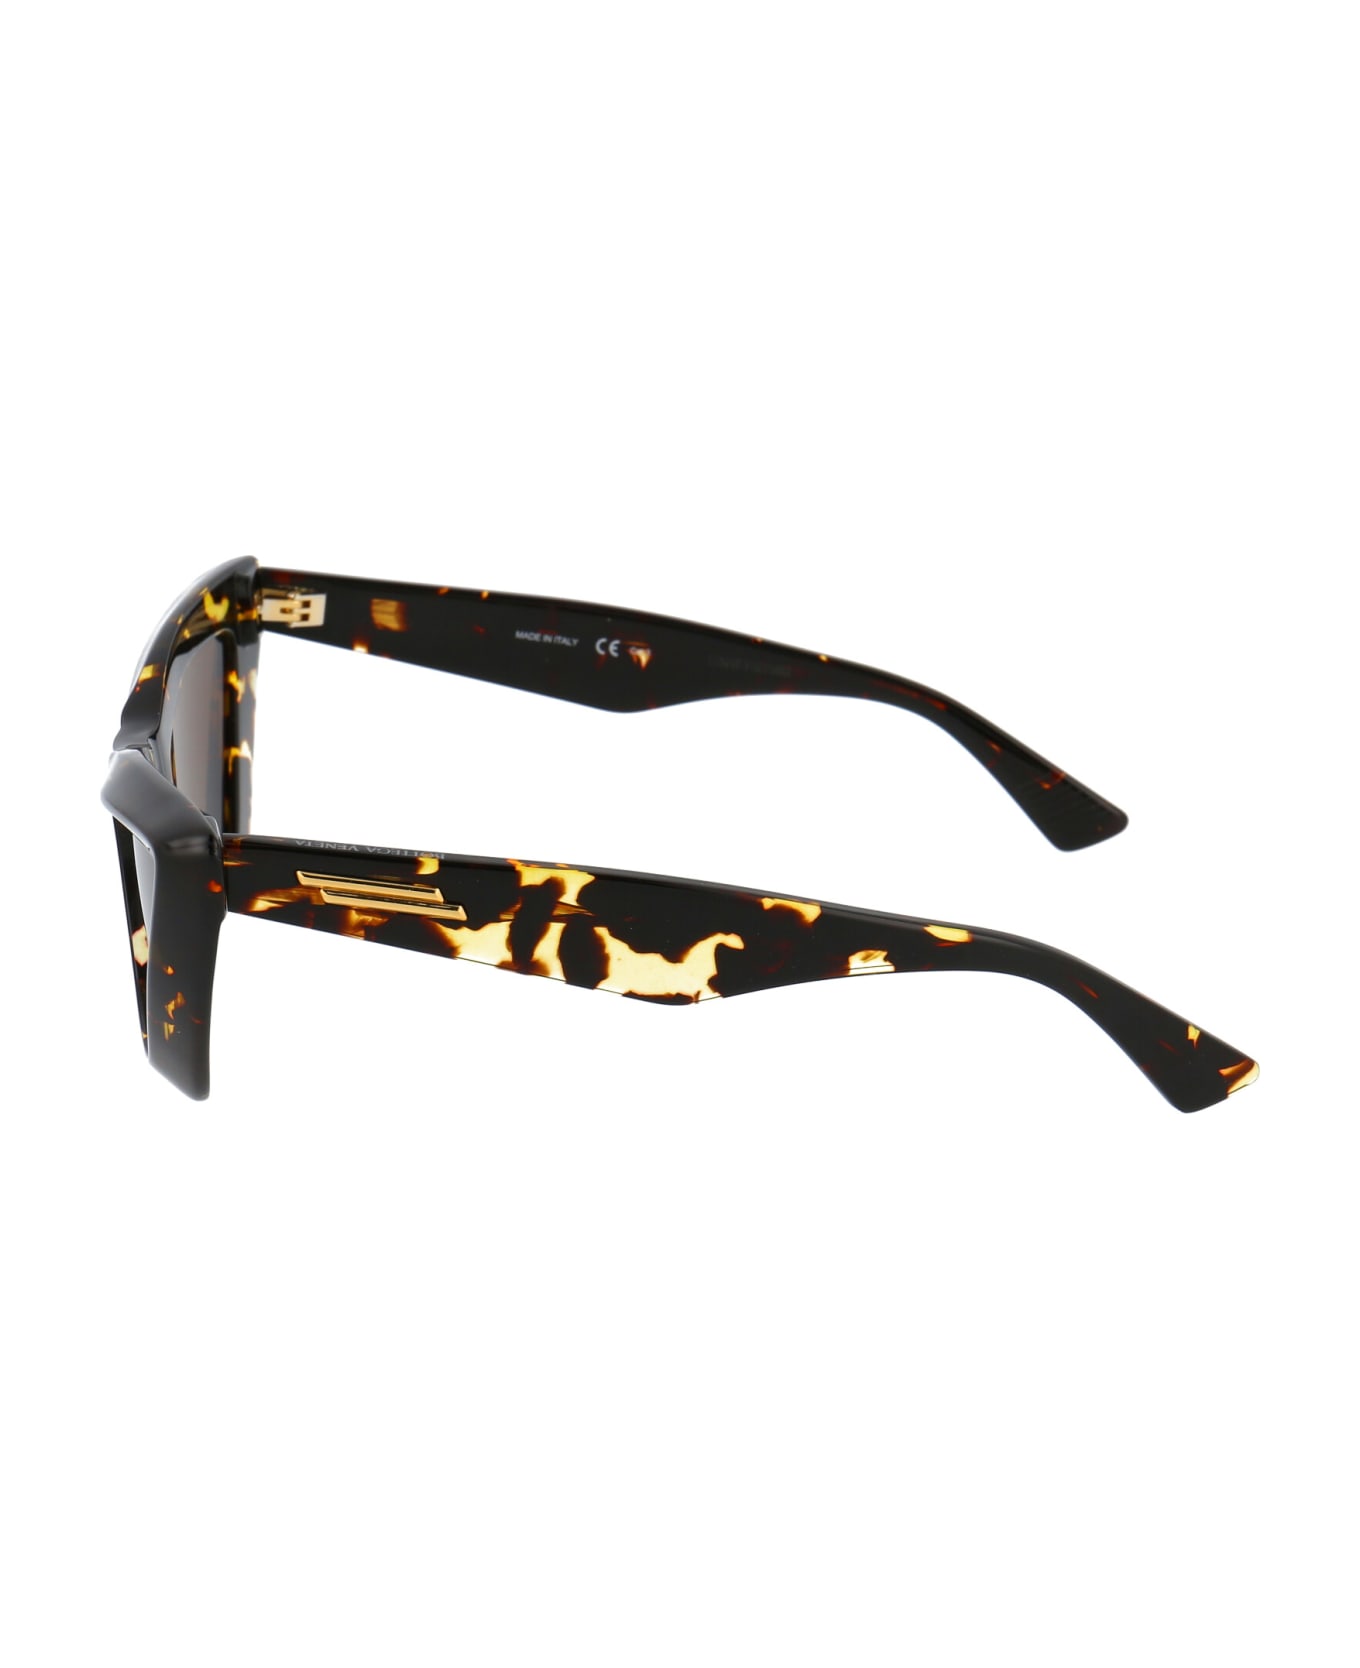 Bottega Veneta Eyewear Bv1101s Sunglasses - 002 HAVANA HAVANA BROWN